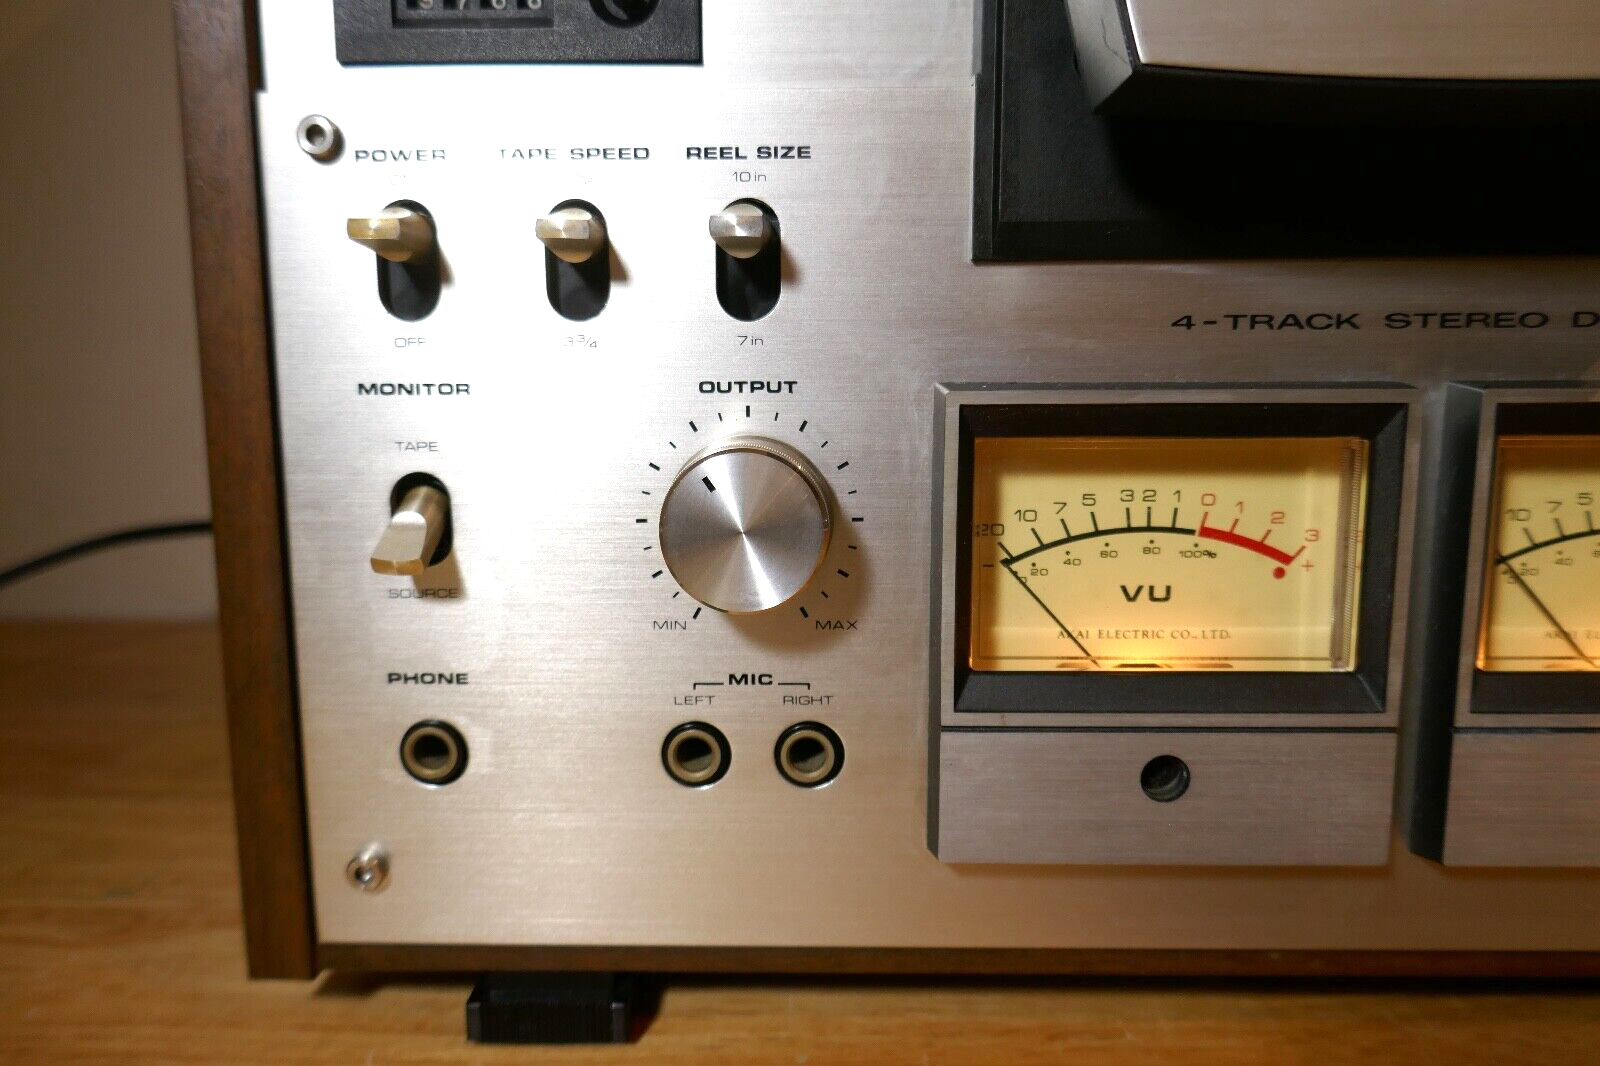 magnétophone tape recorder Akai GX-630D vintage occasion